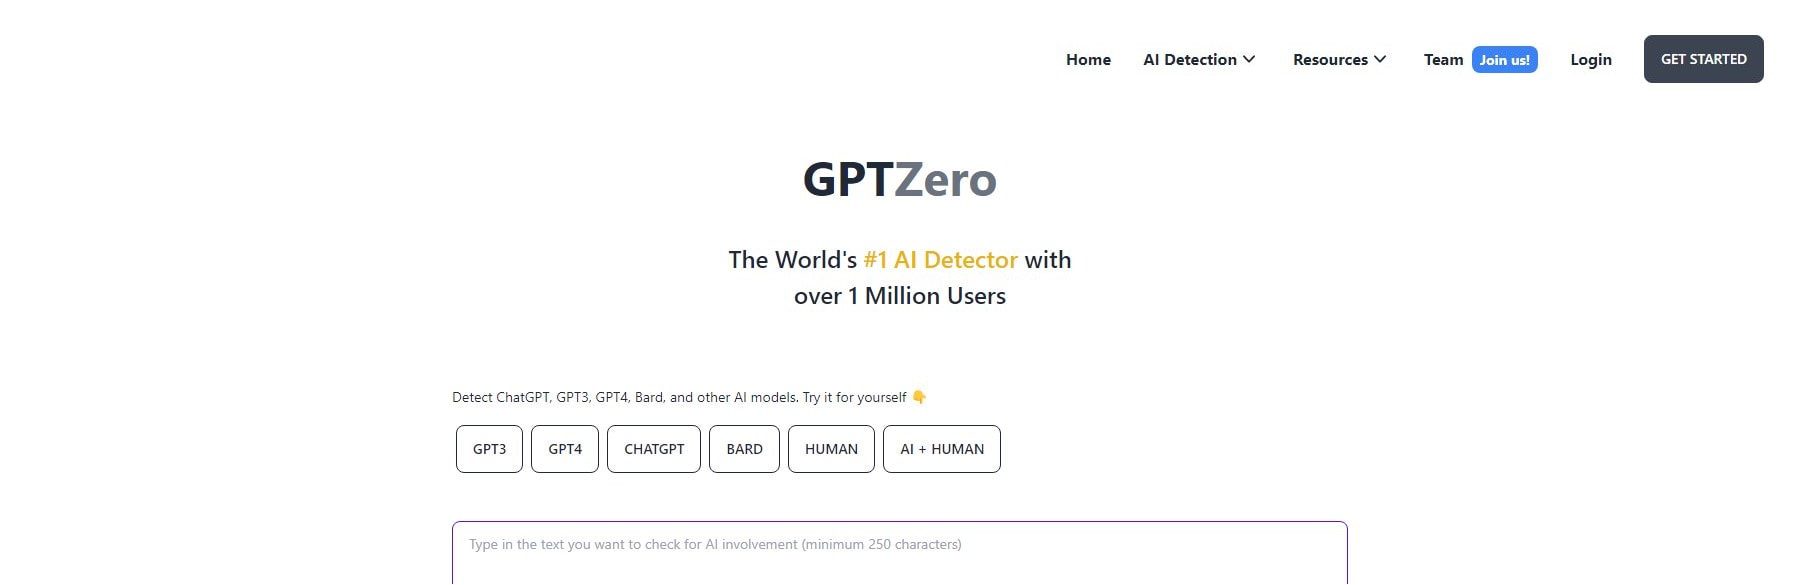 Gptzero - Homepage May 2023